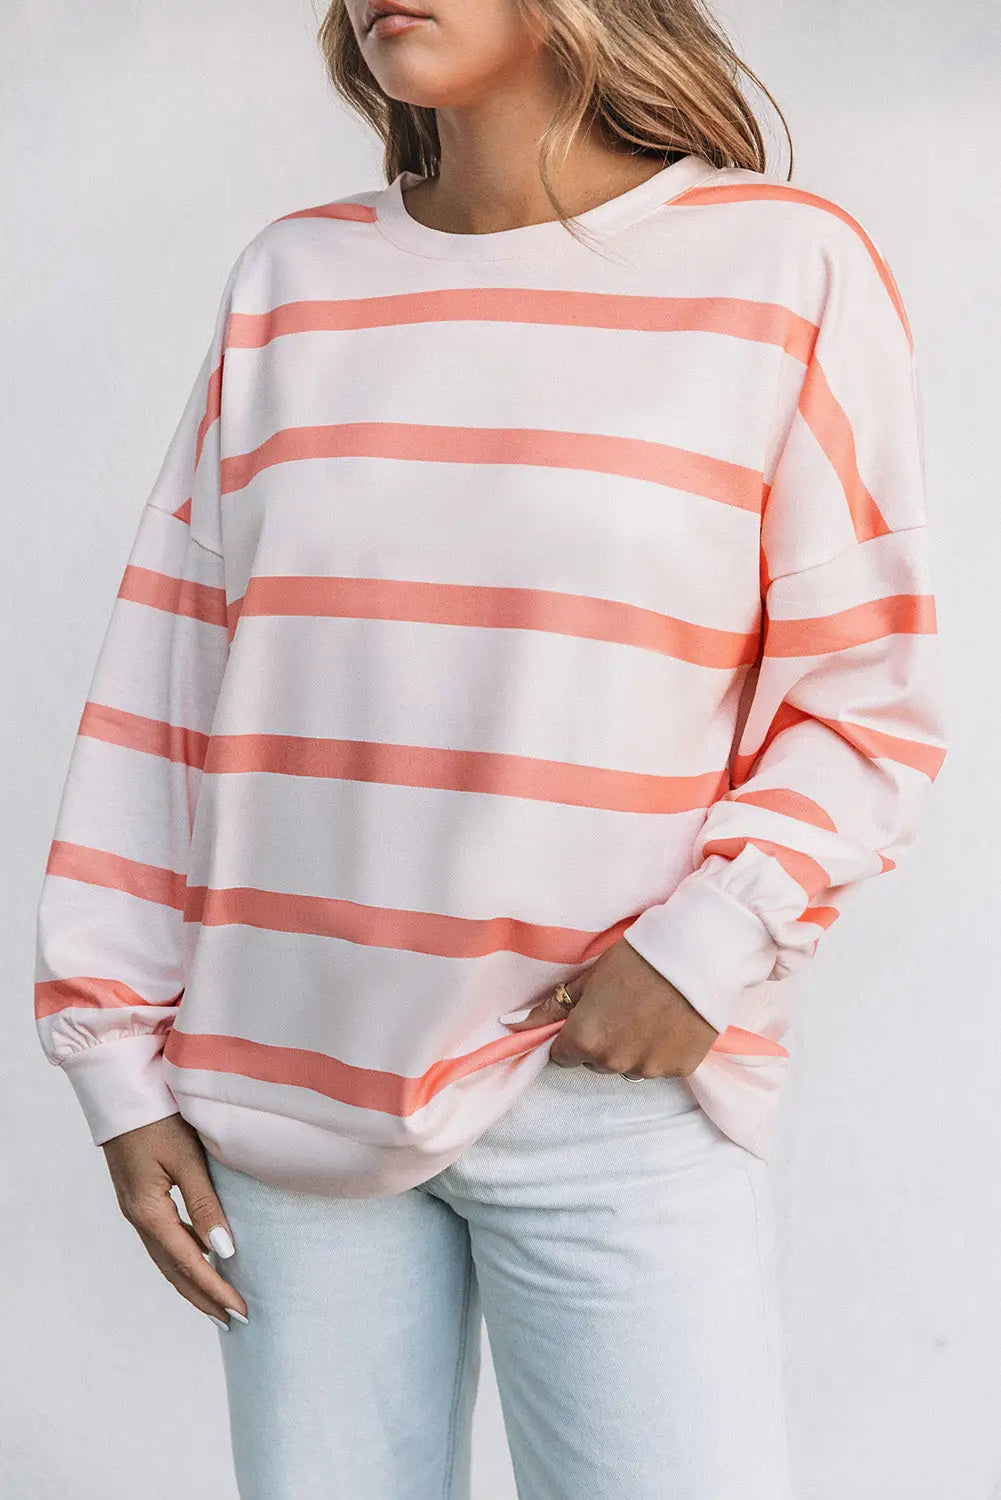 Stripe striped drop shoulder pullover sweatshirt - sweatshirts & hoodies